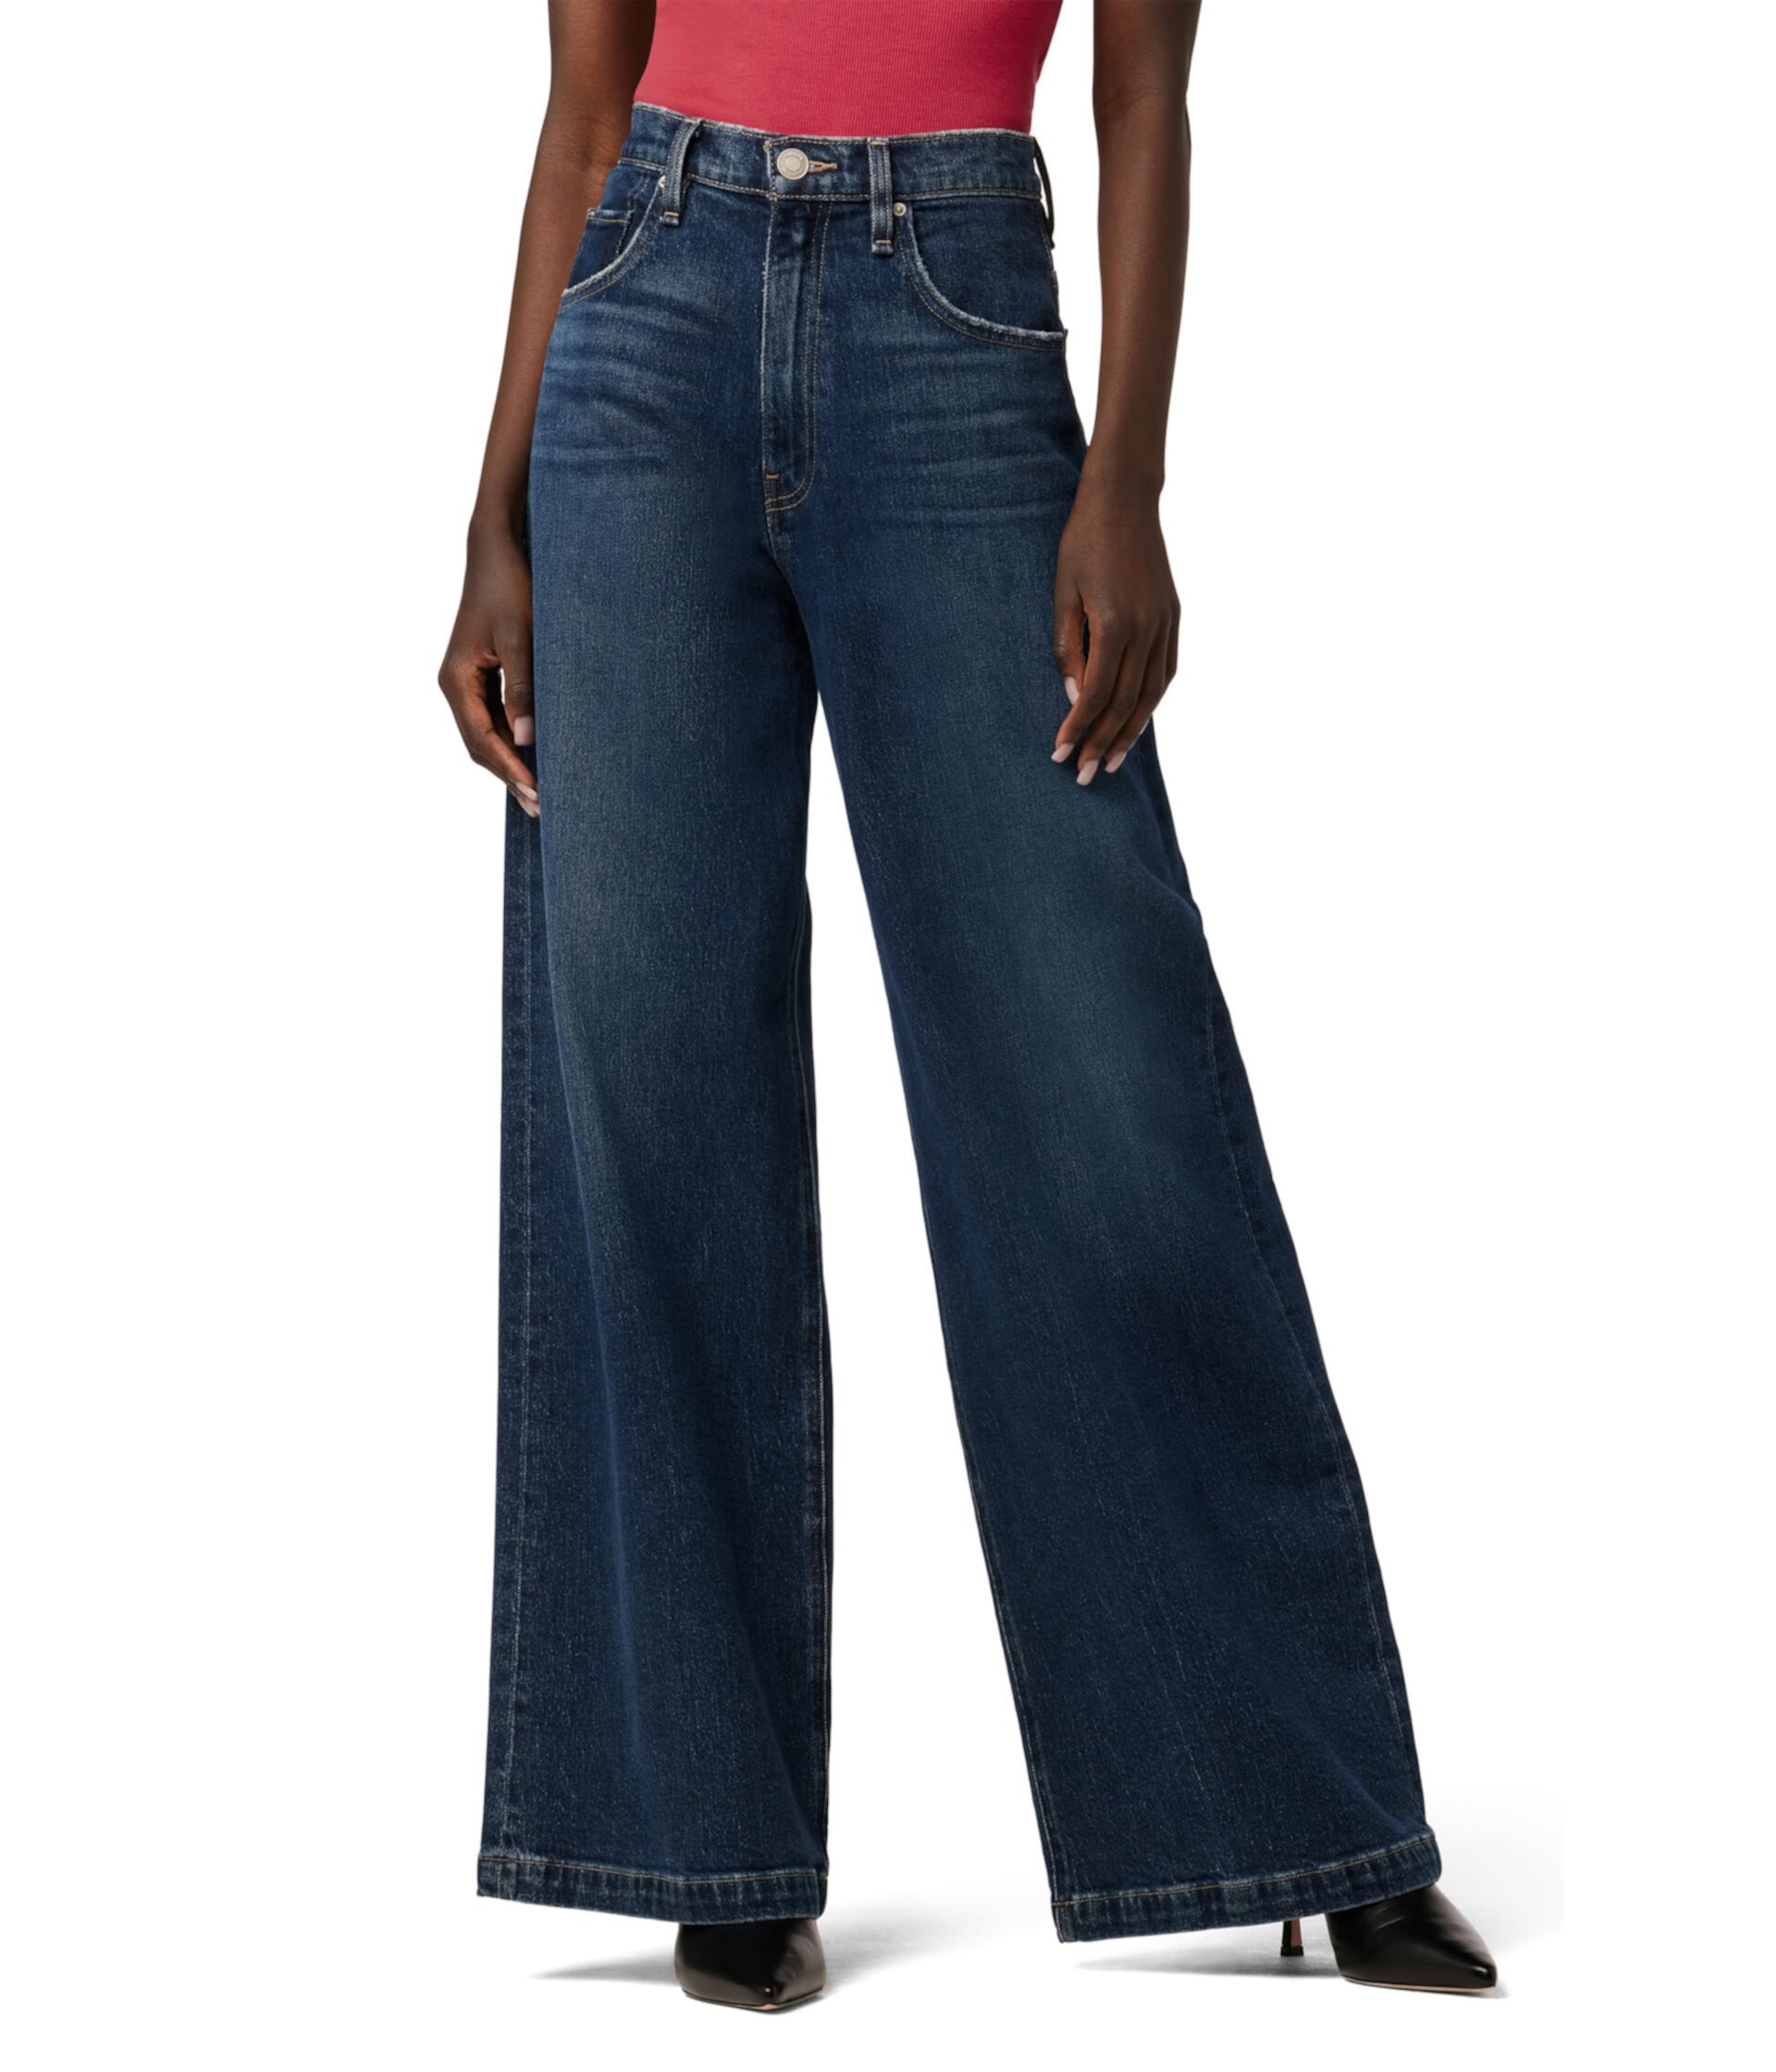 Джинсы Hudson Jeans James High-Rise с широкими брючинами в цвете Naval для женщин Hudson Jeans